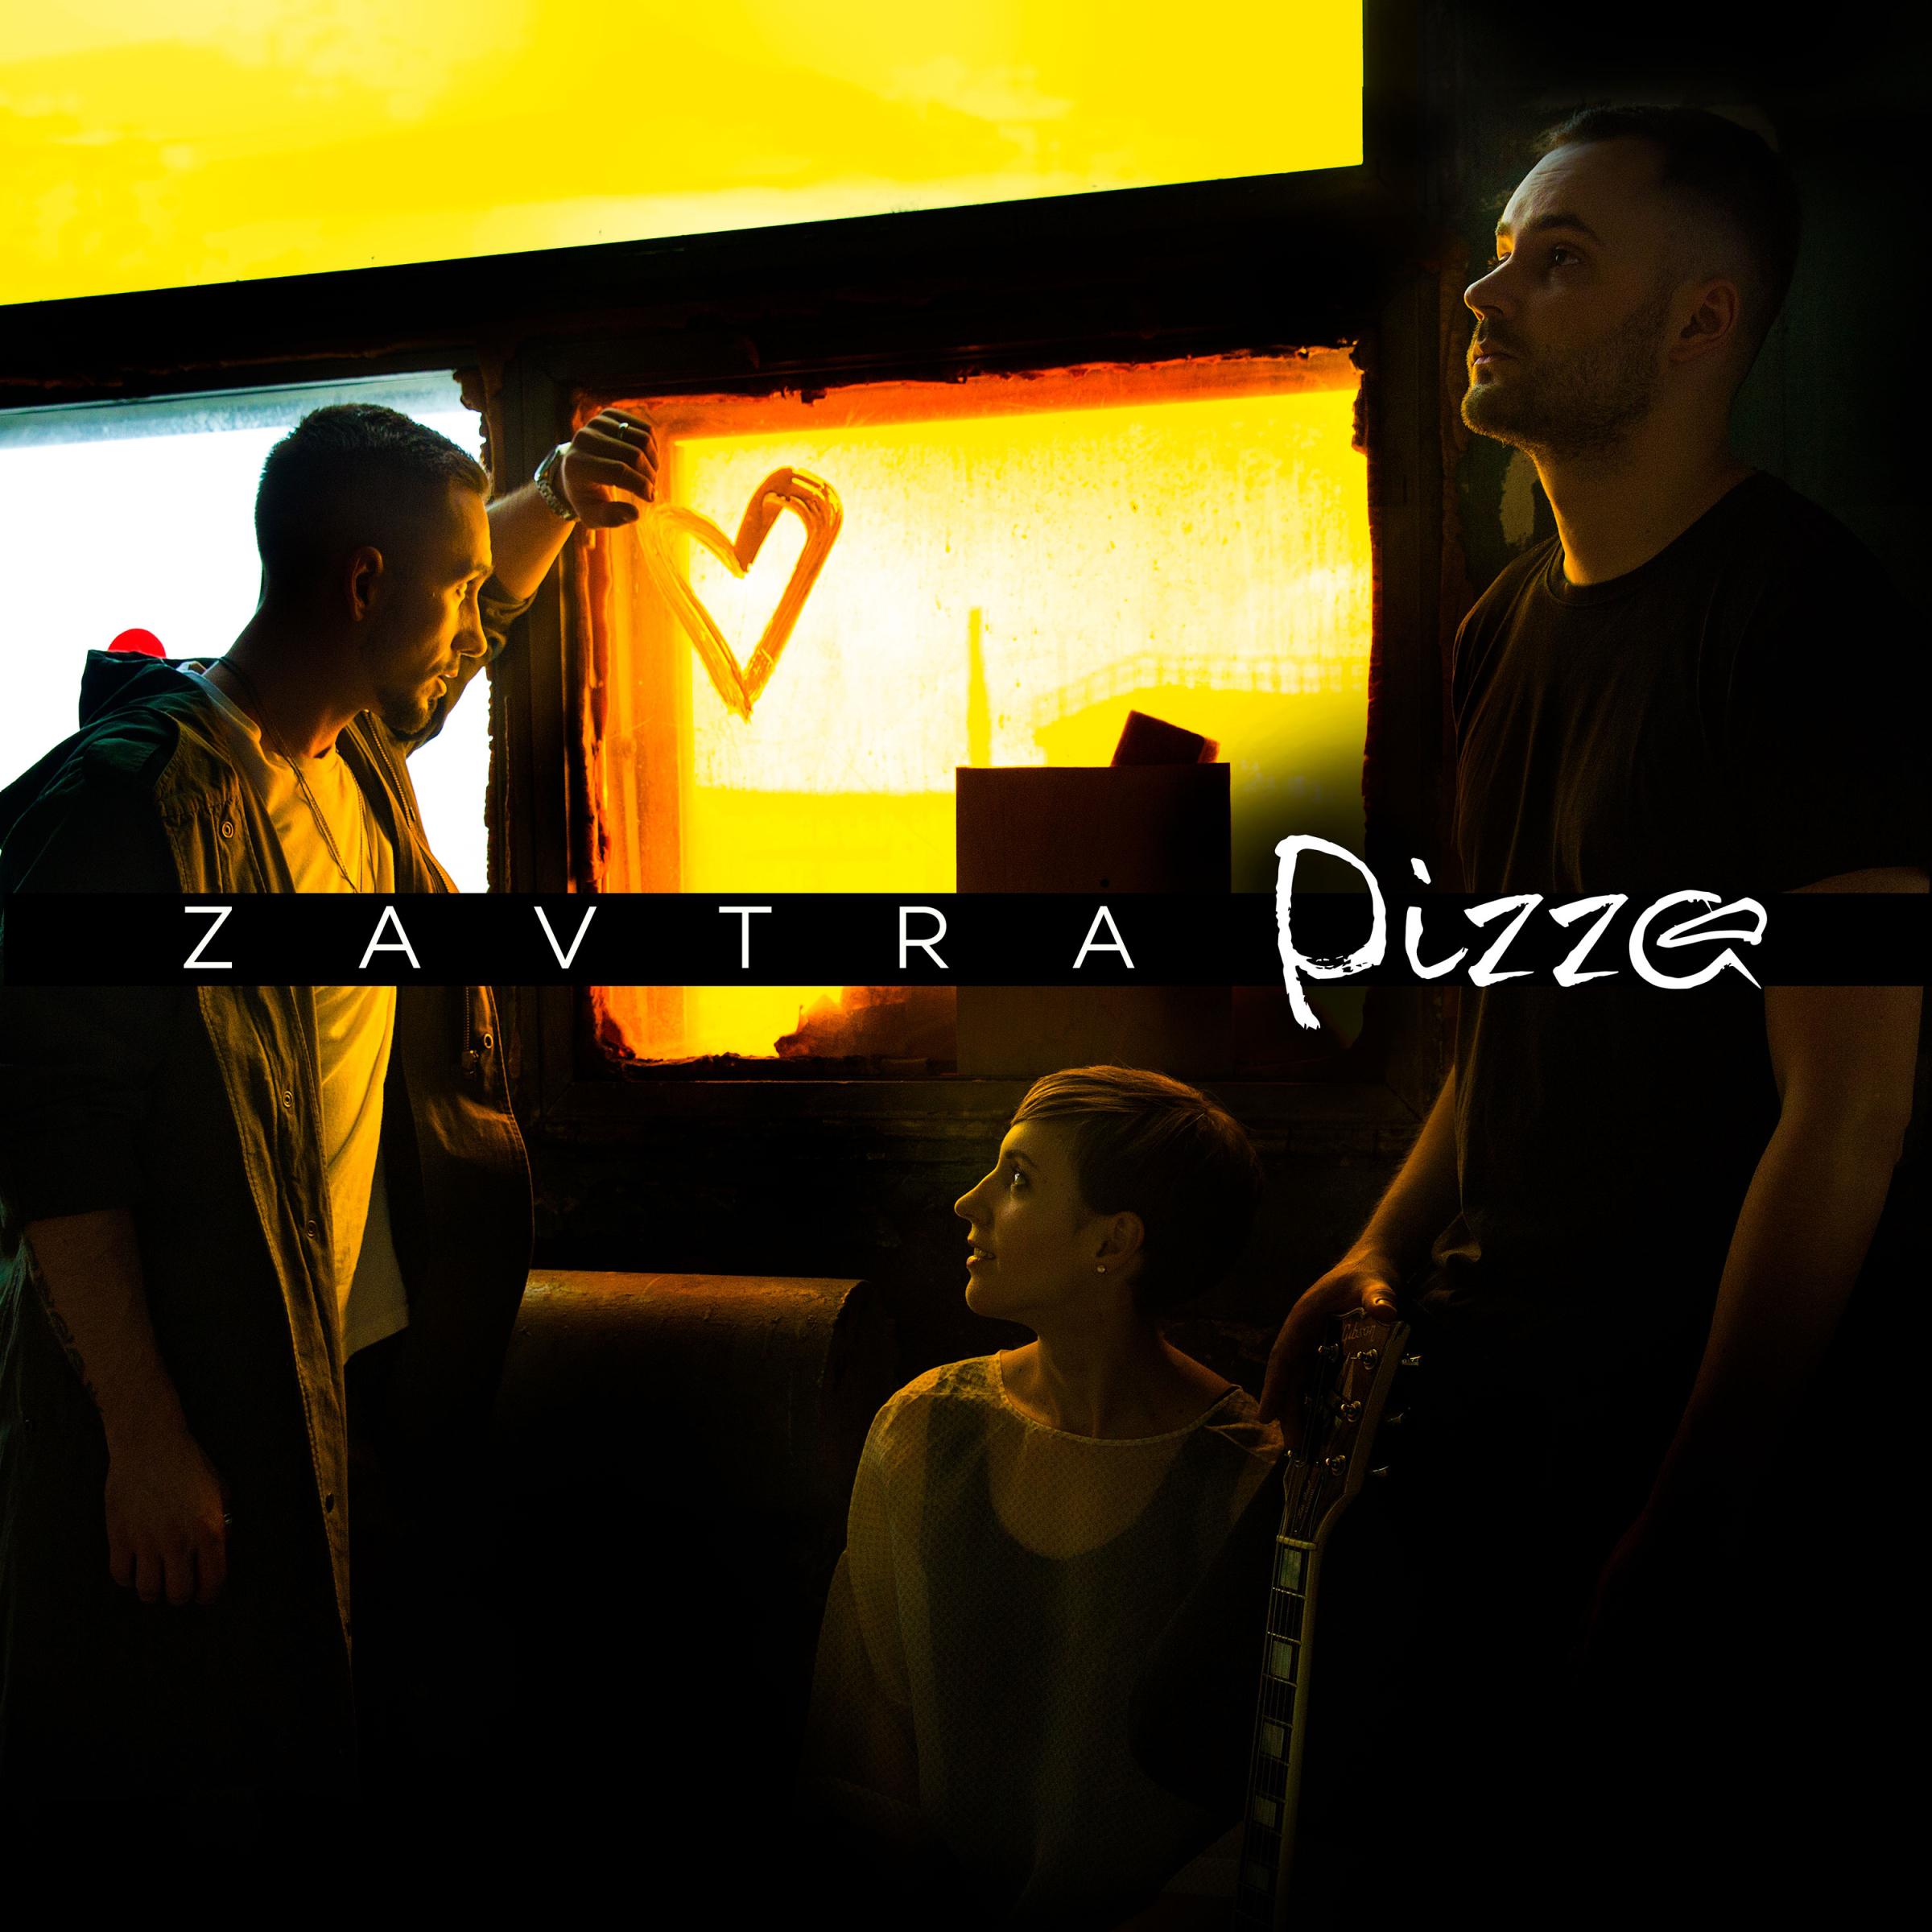 Zavtra ru blogs. Группа пицца альбом zavtra. Pizza обложка альбома. Группа пицца альбомы. Группа пицца обложка альбома.